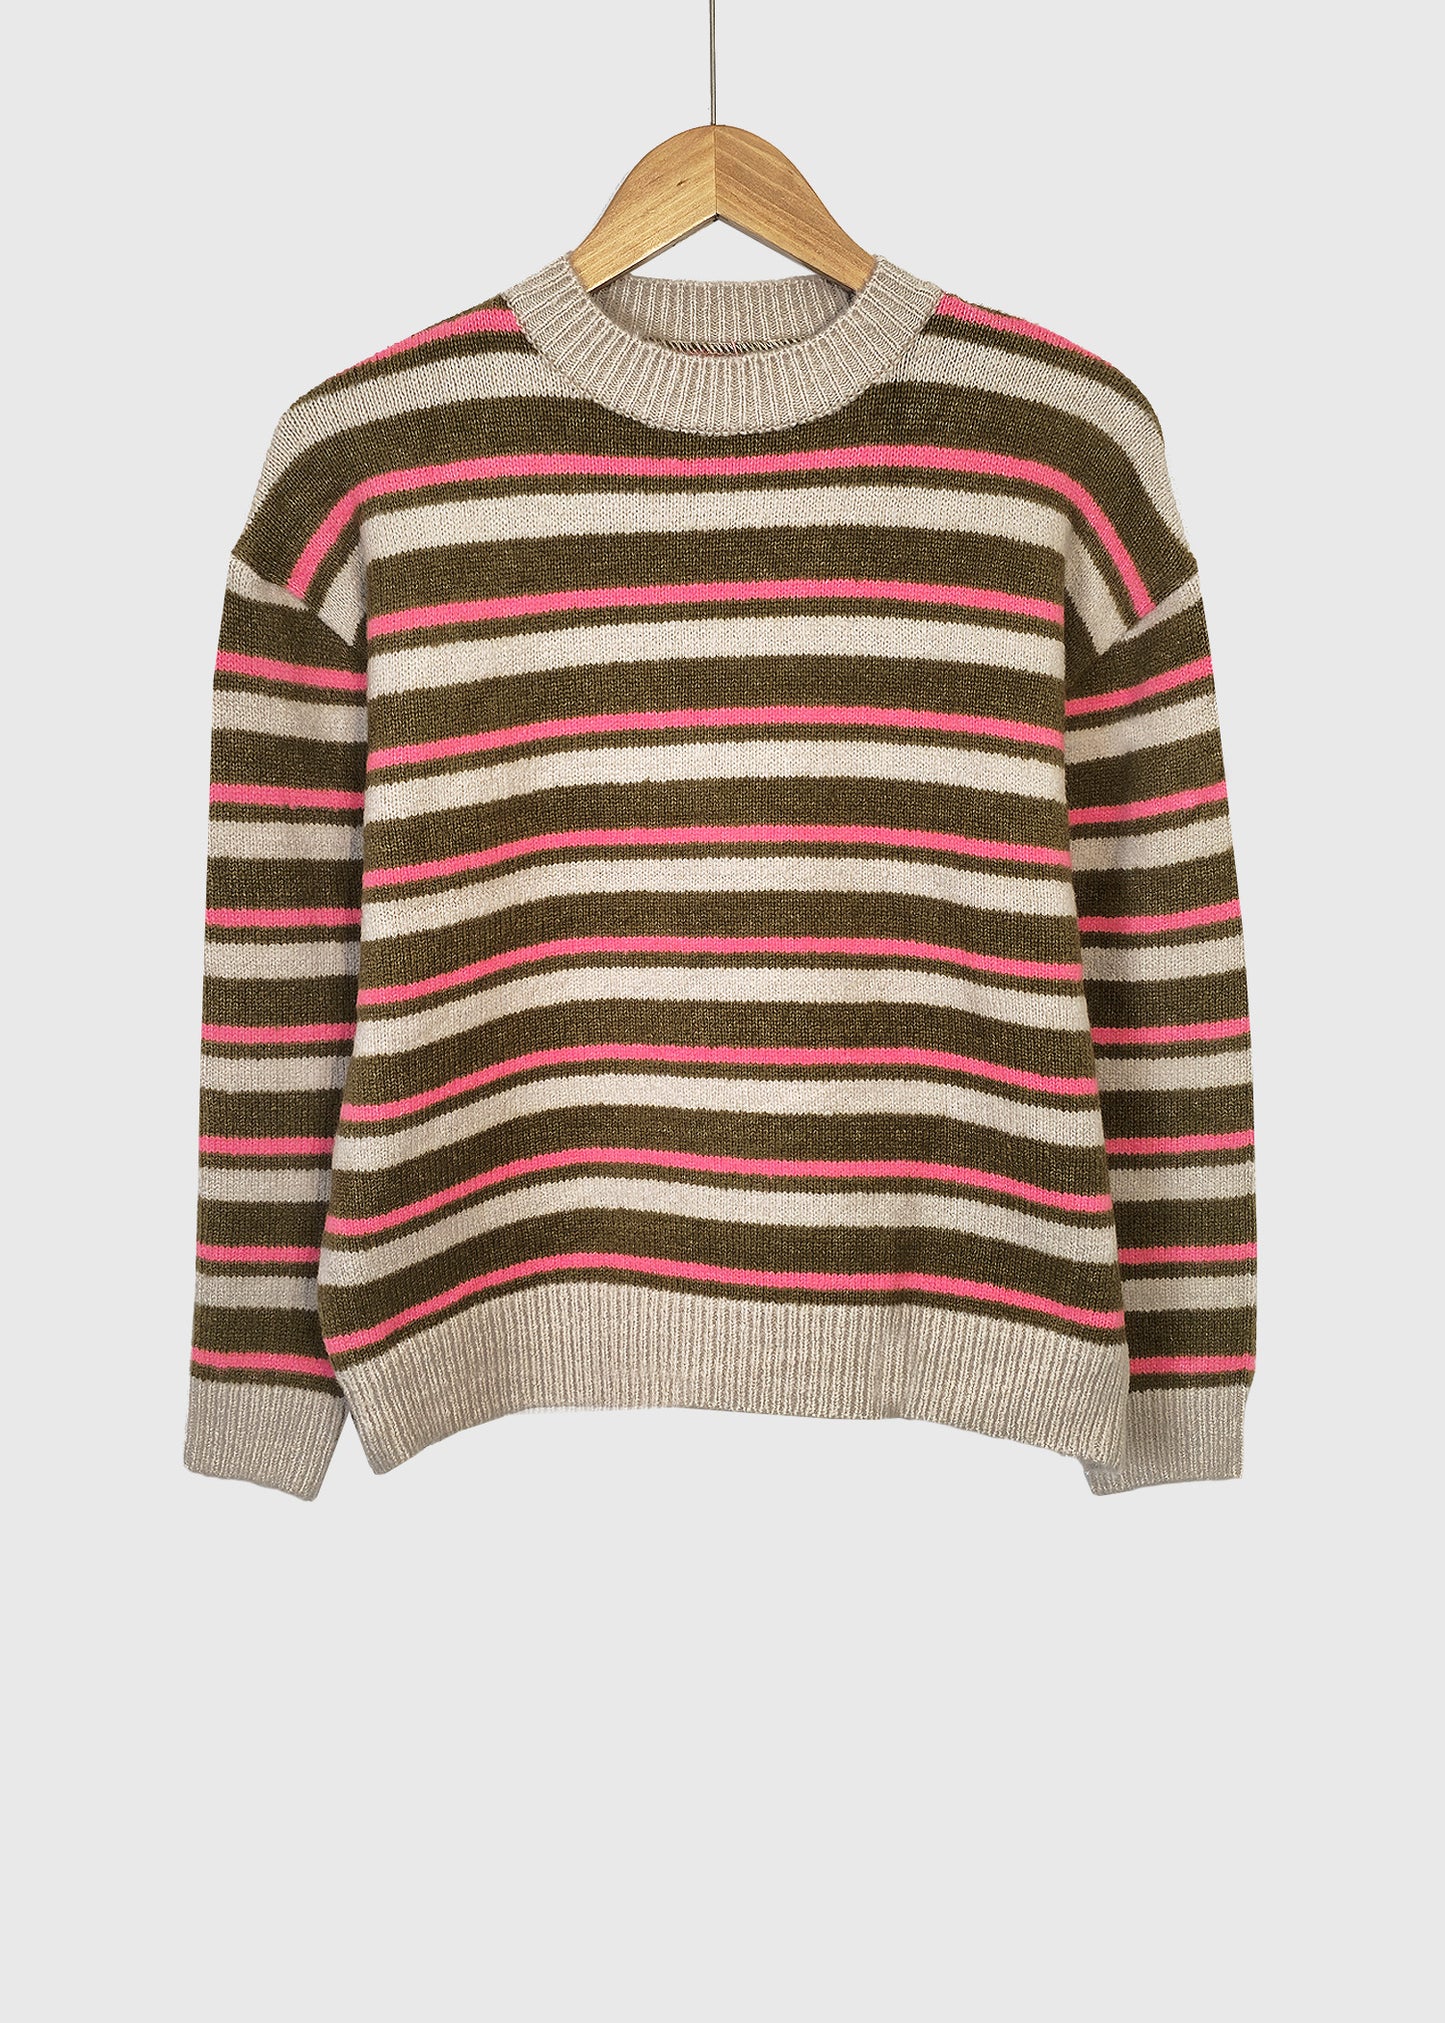 POPCORN Striped Sweater